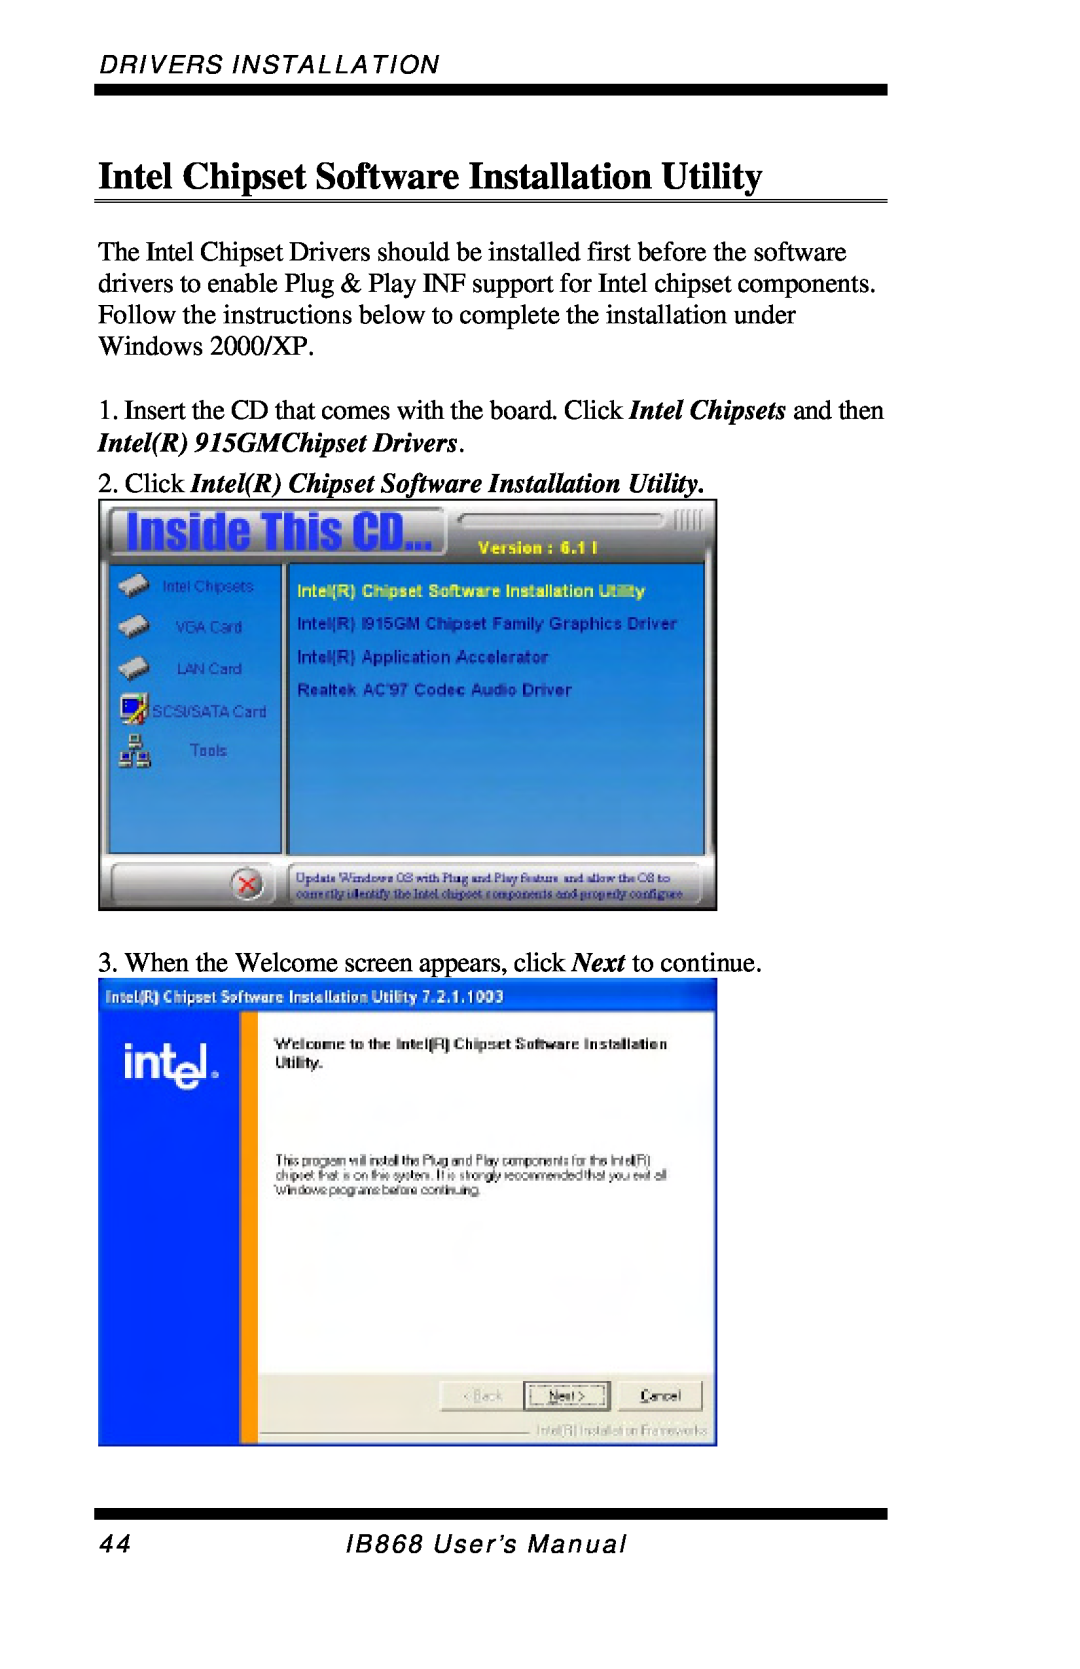 Intel user manual Intel Chipset Software Installation Utility, Drivers Installation, IB868 User’s Manual 